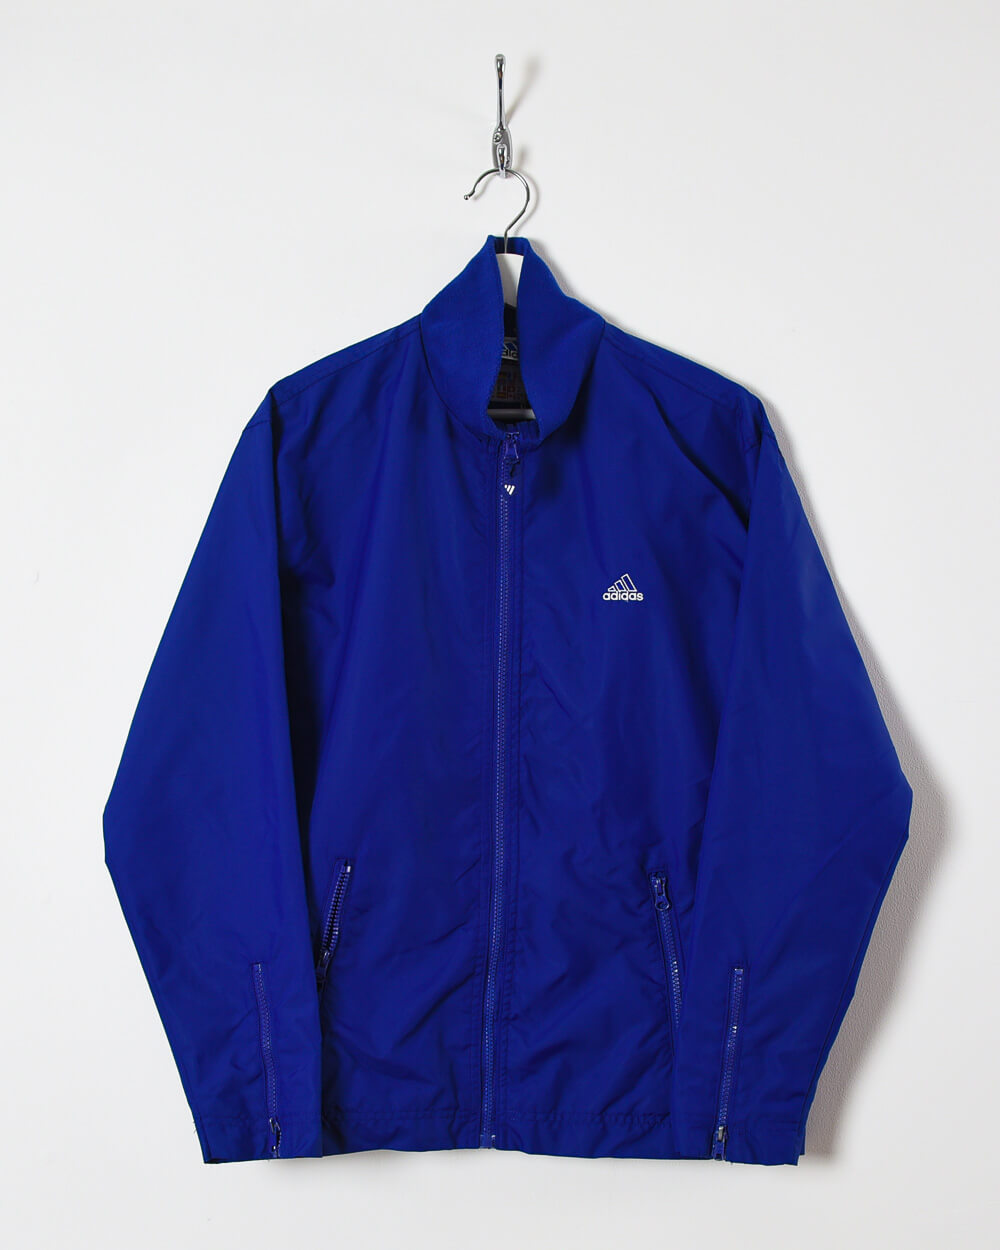 Adidas Women's Jacket - Large - Domno Vintage 90s, 80s, 00s Retro and Vintage Clothing 